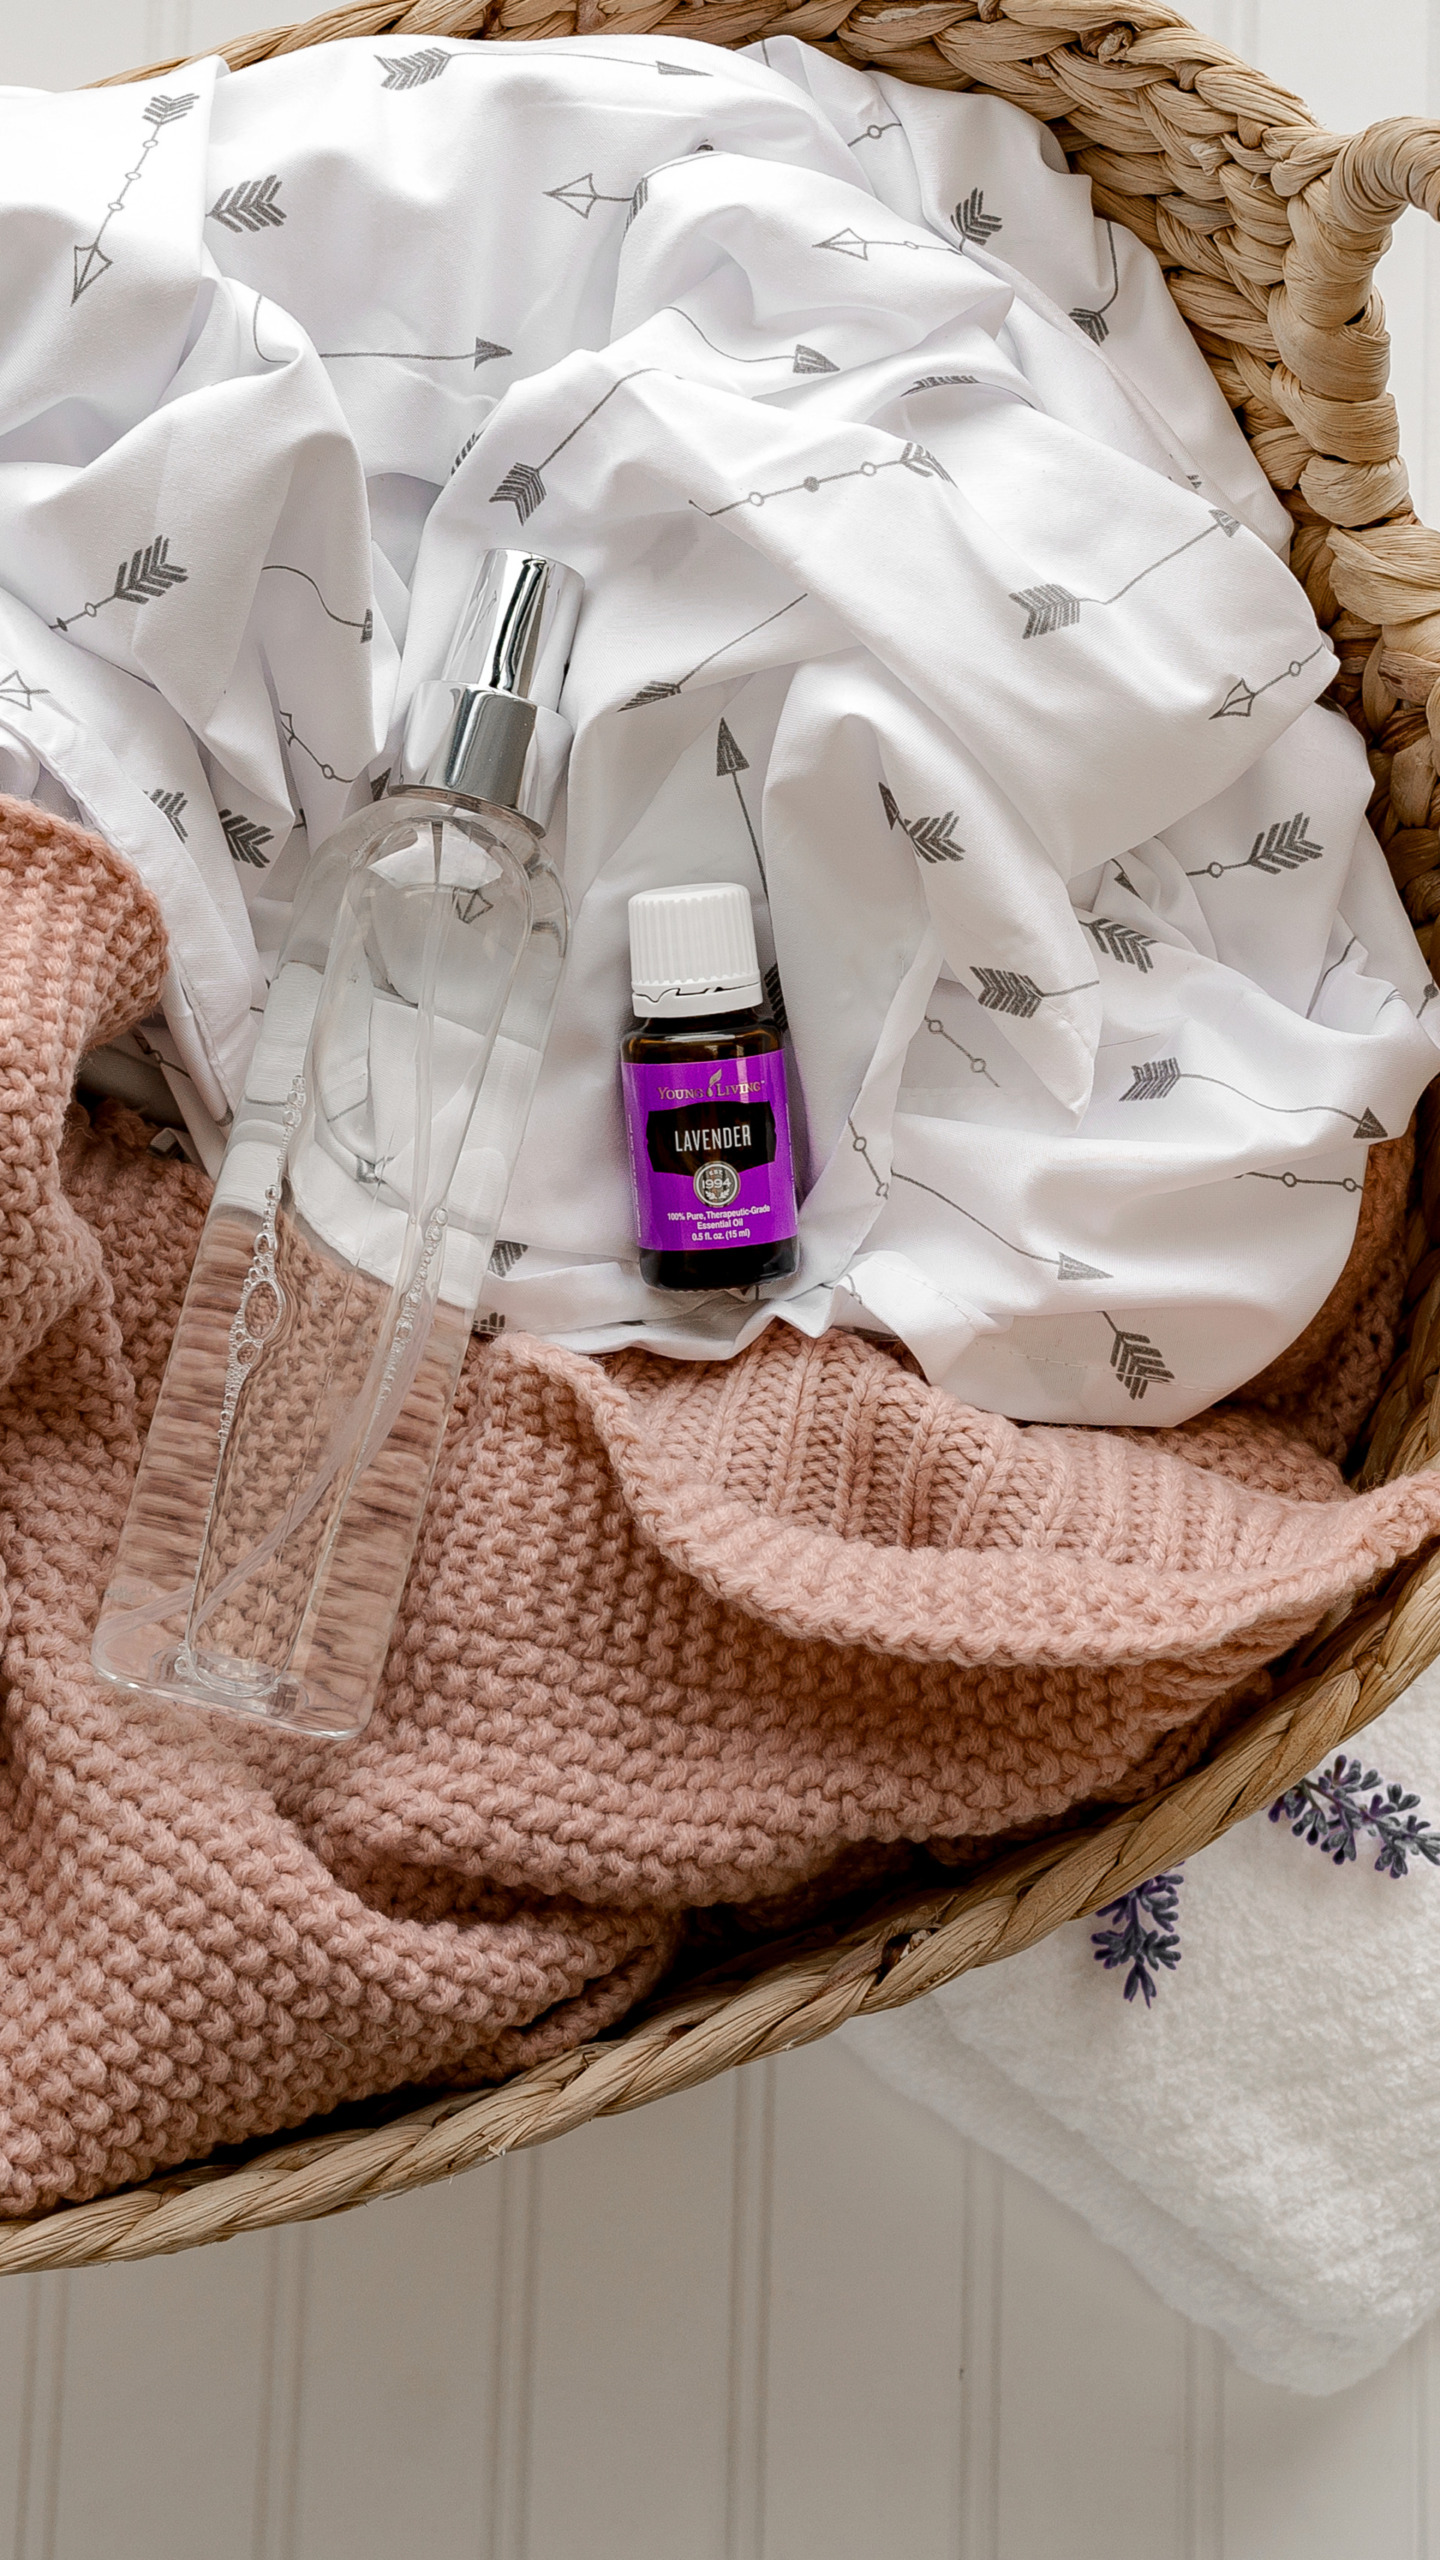 Lavender essential oil in laundry basket